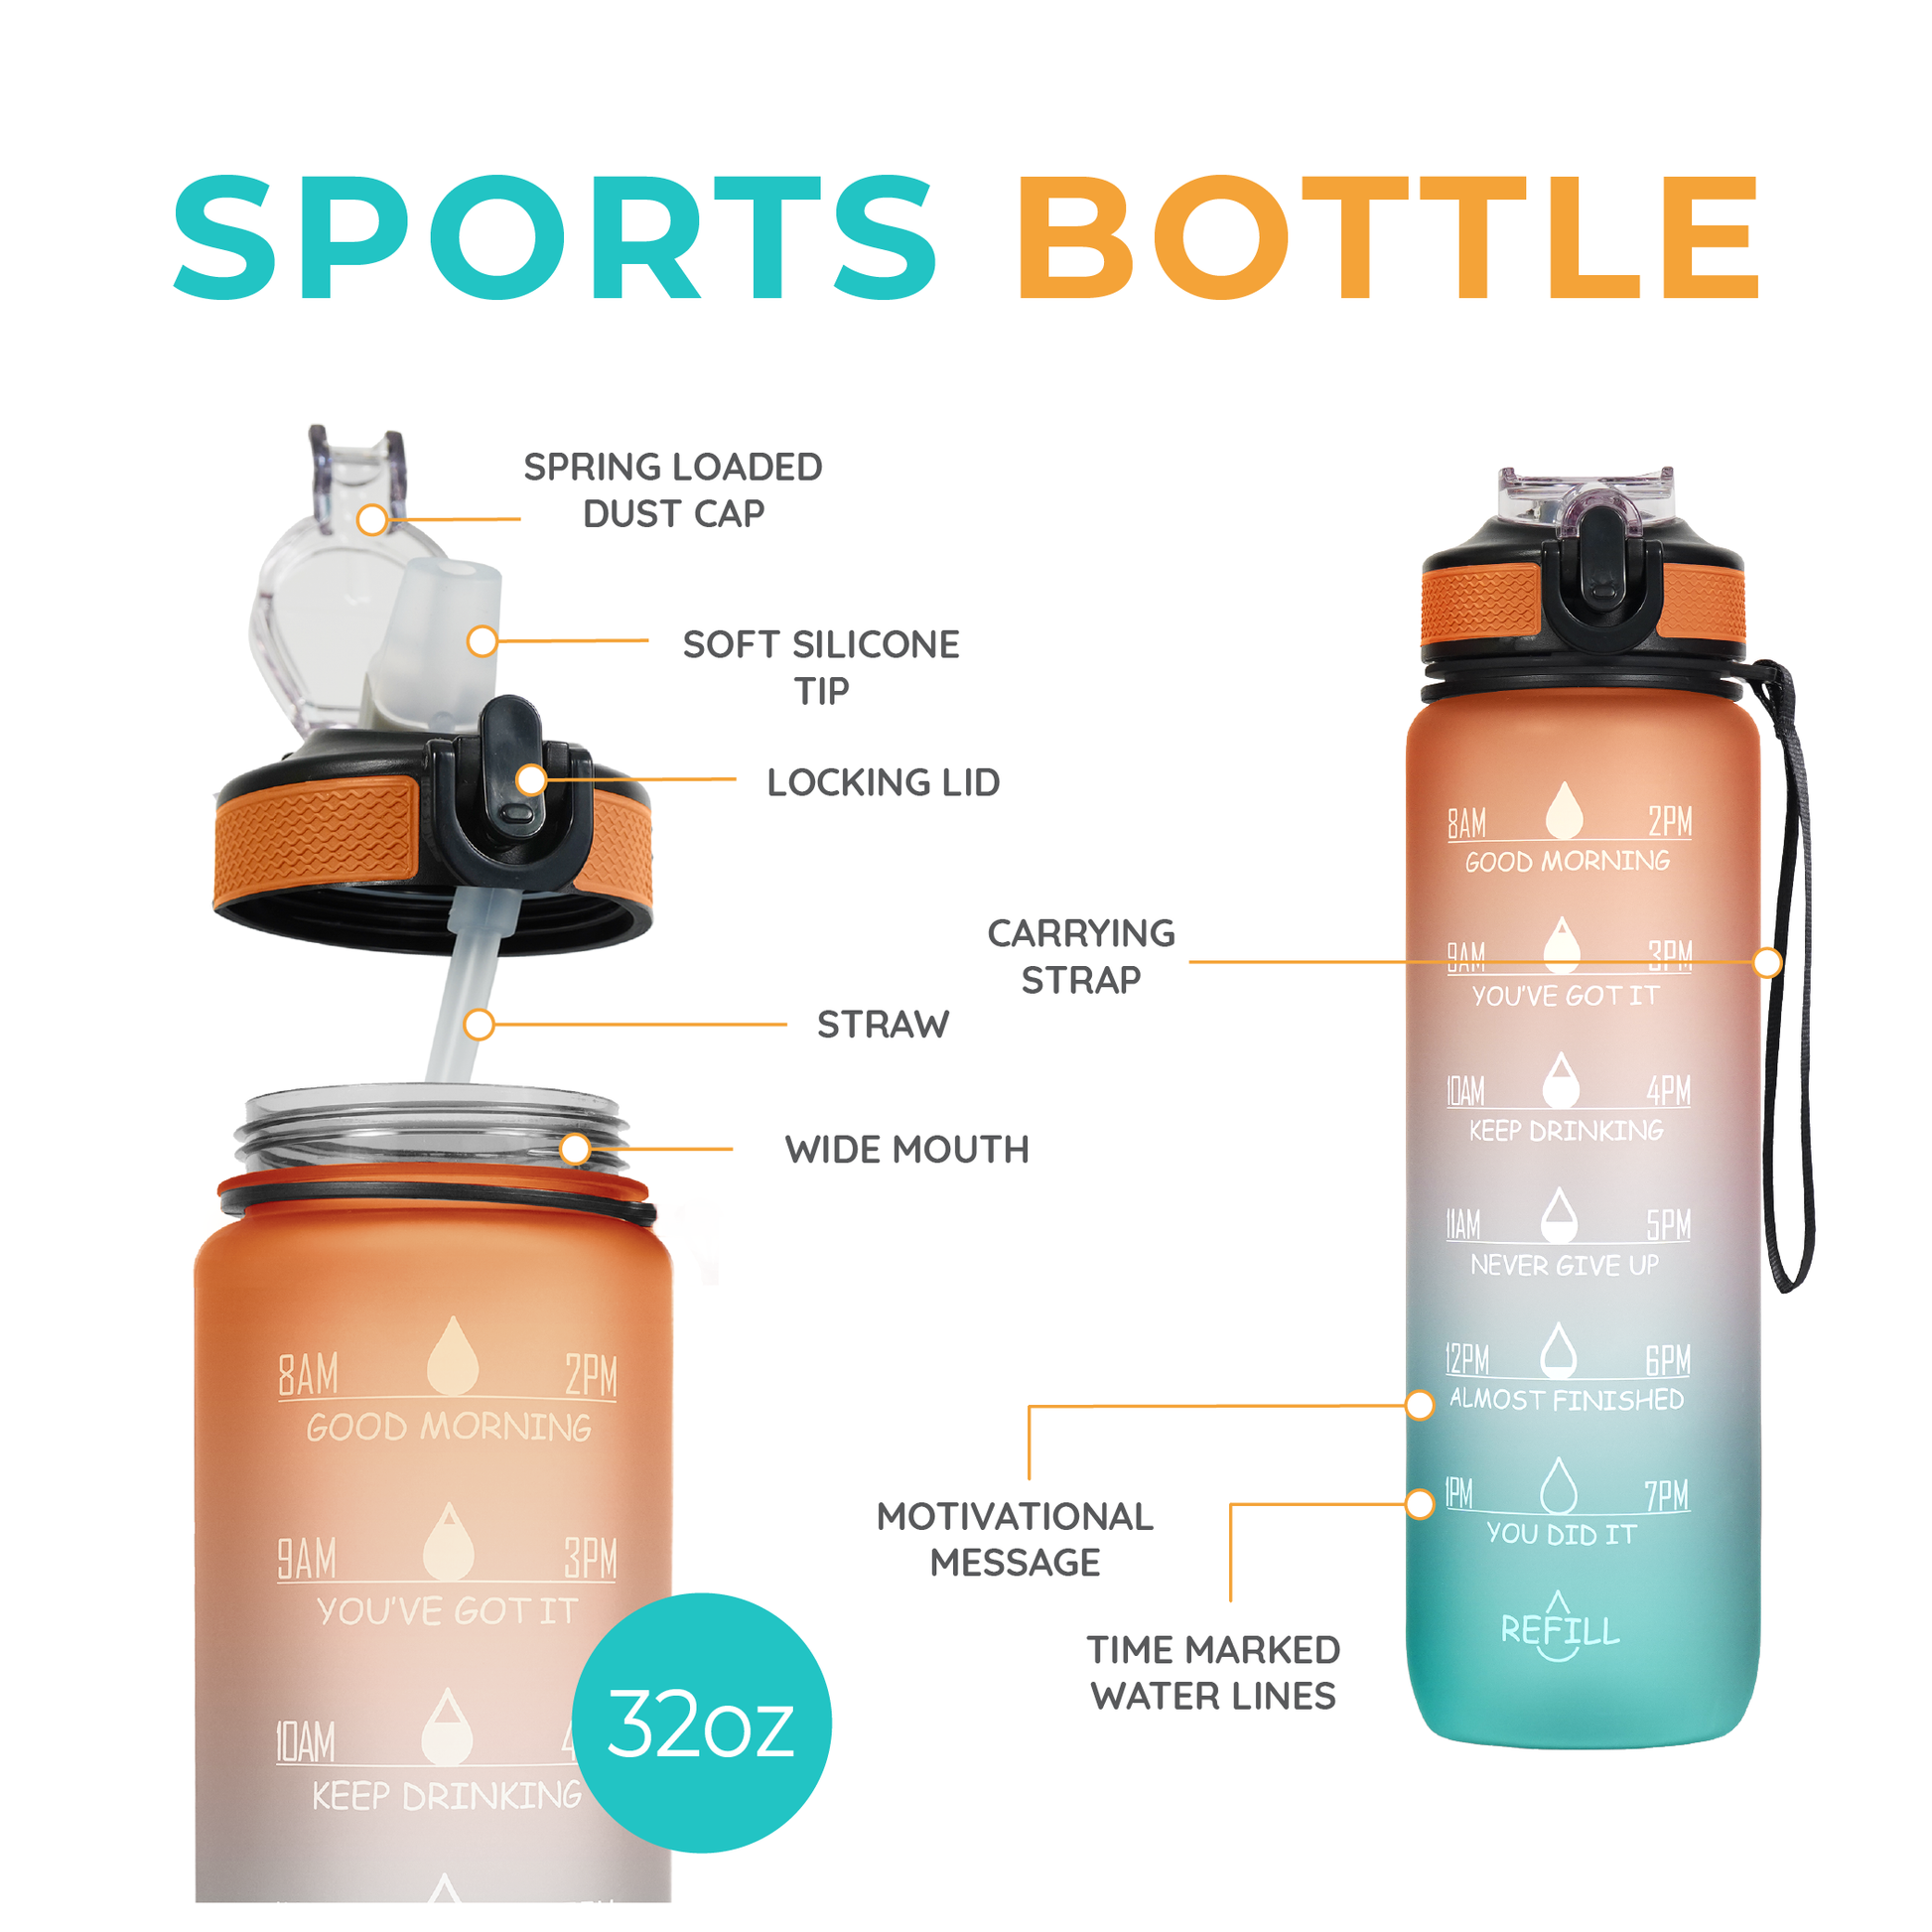 Solara sports bottle online